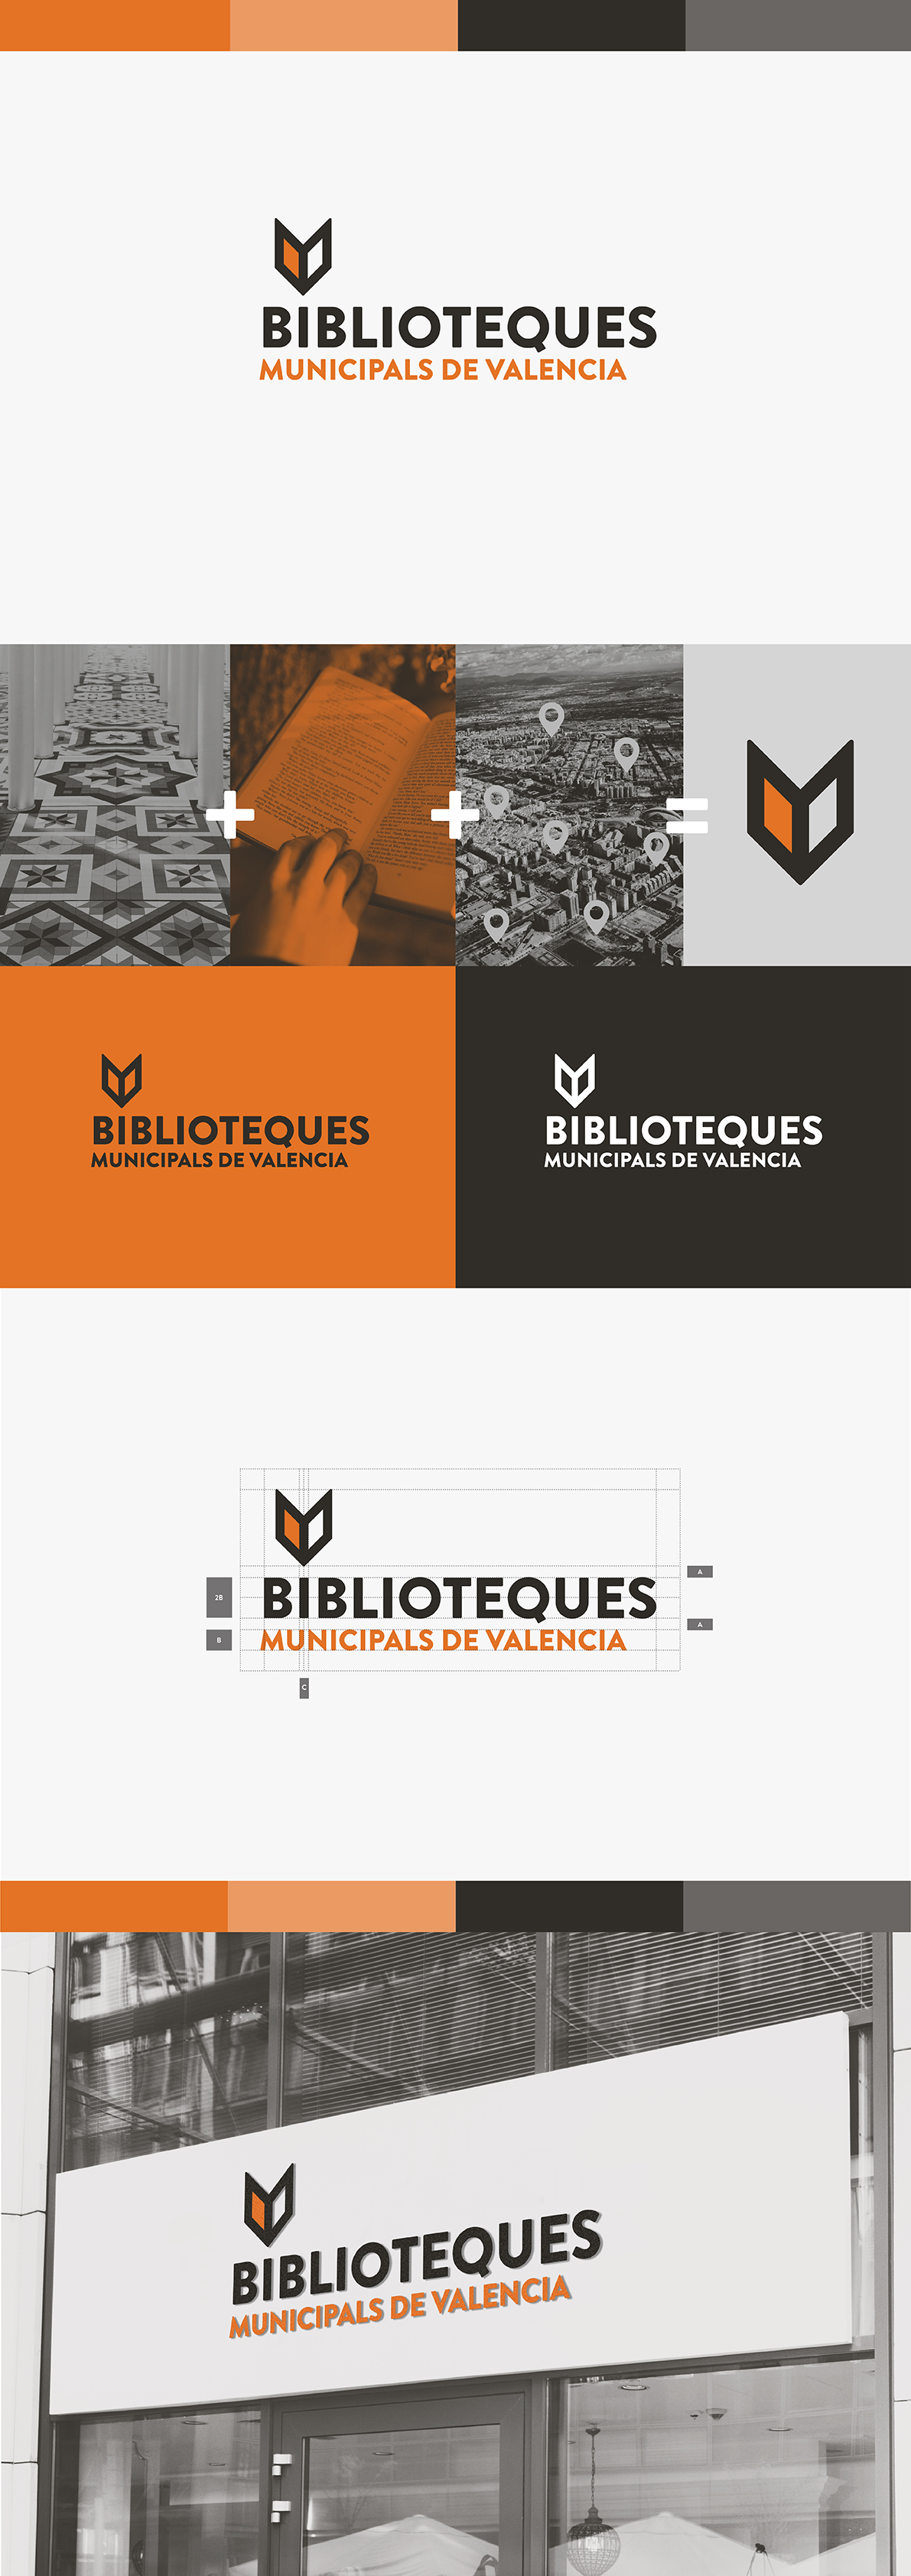 Biblioteques Municipals de Valencia by Daniel Martinez - Creative Work